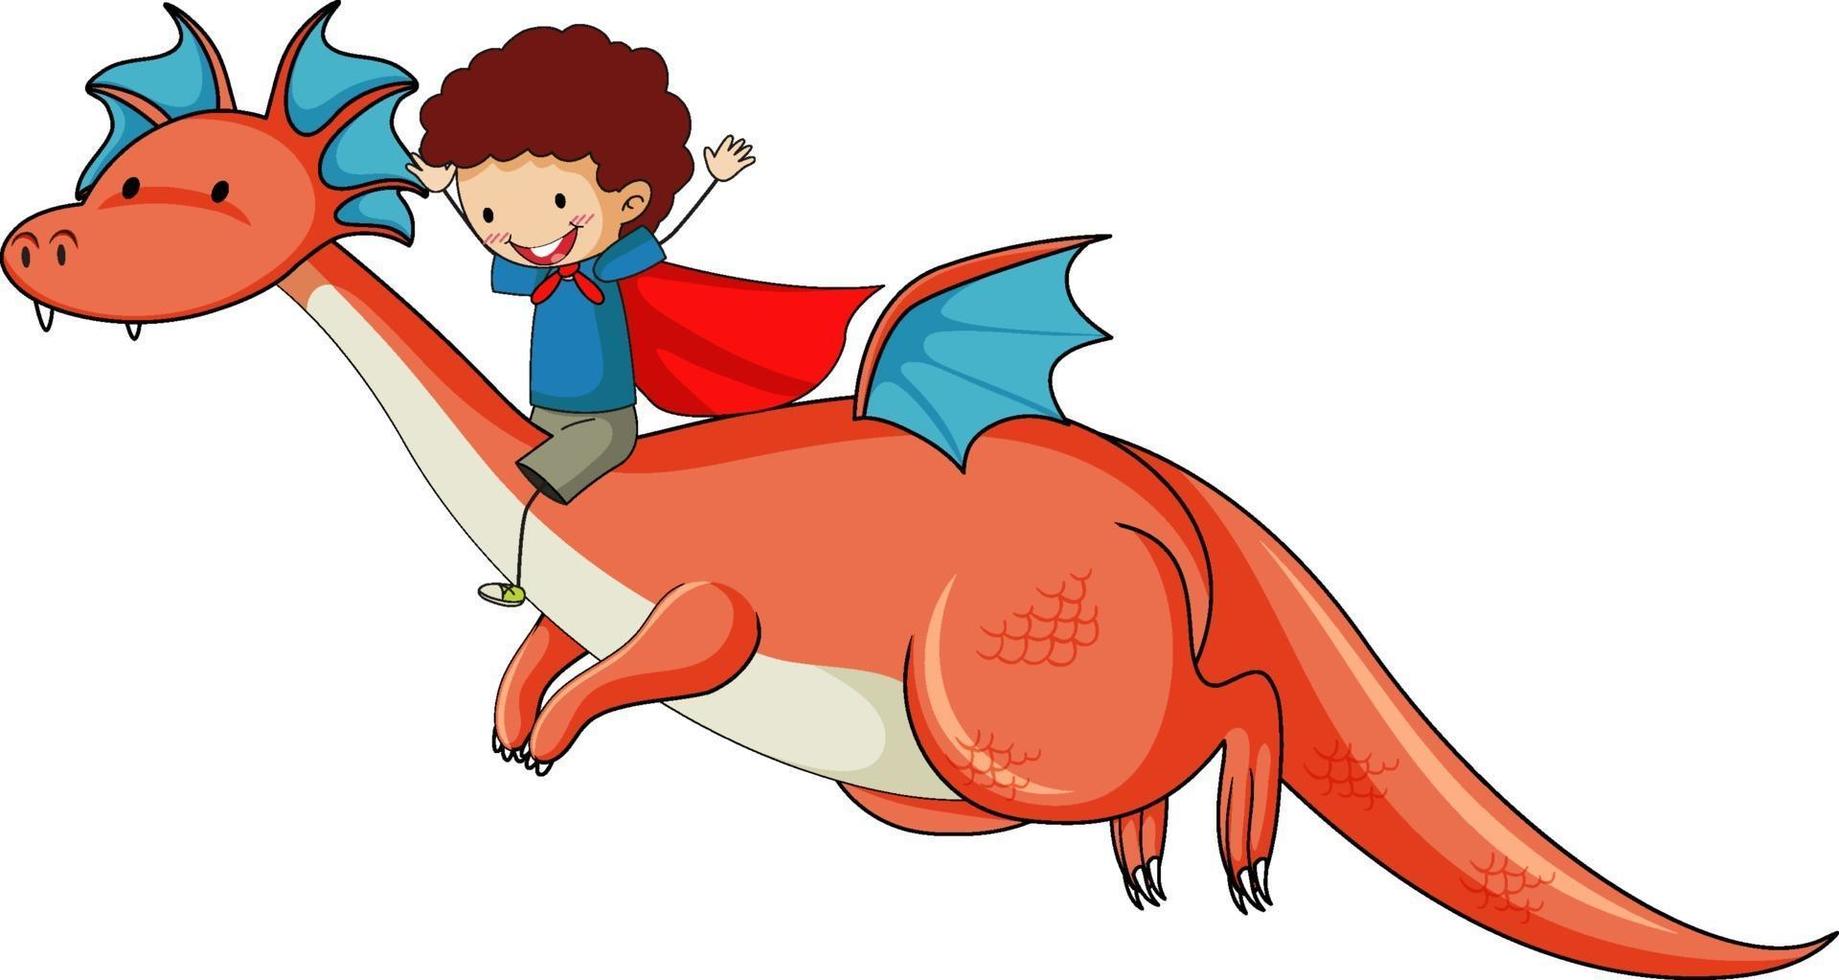 Little boy riding a dragon cartoon character vector